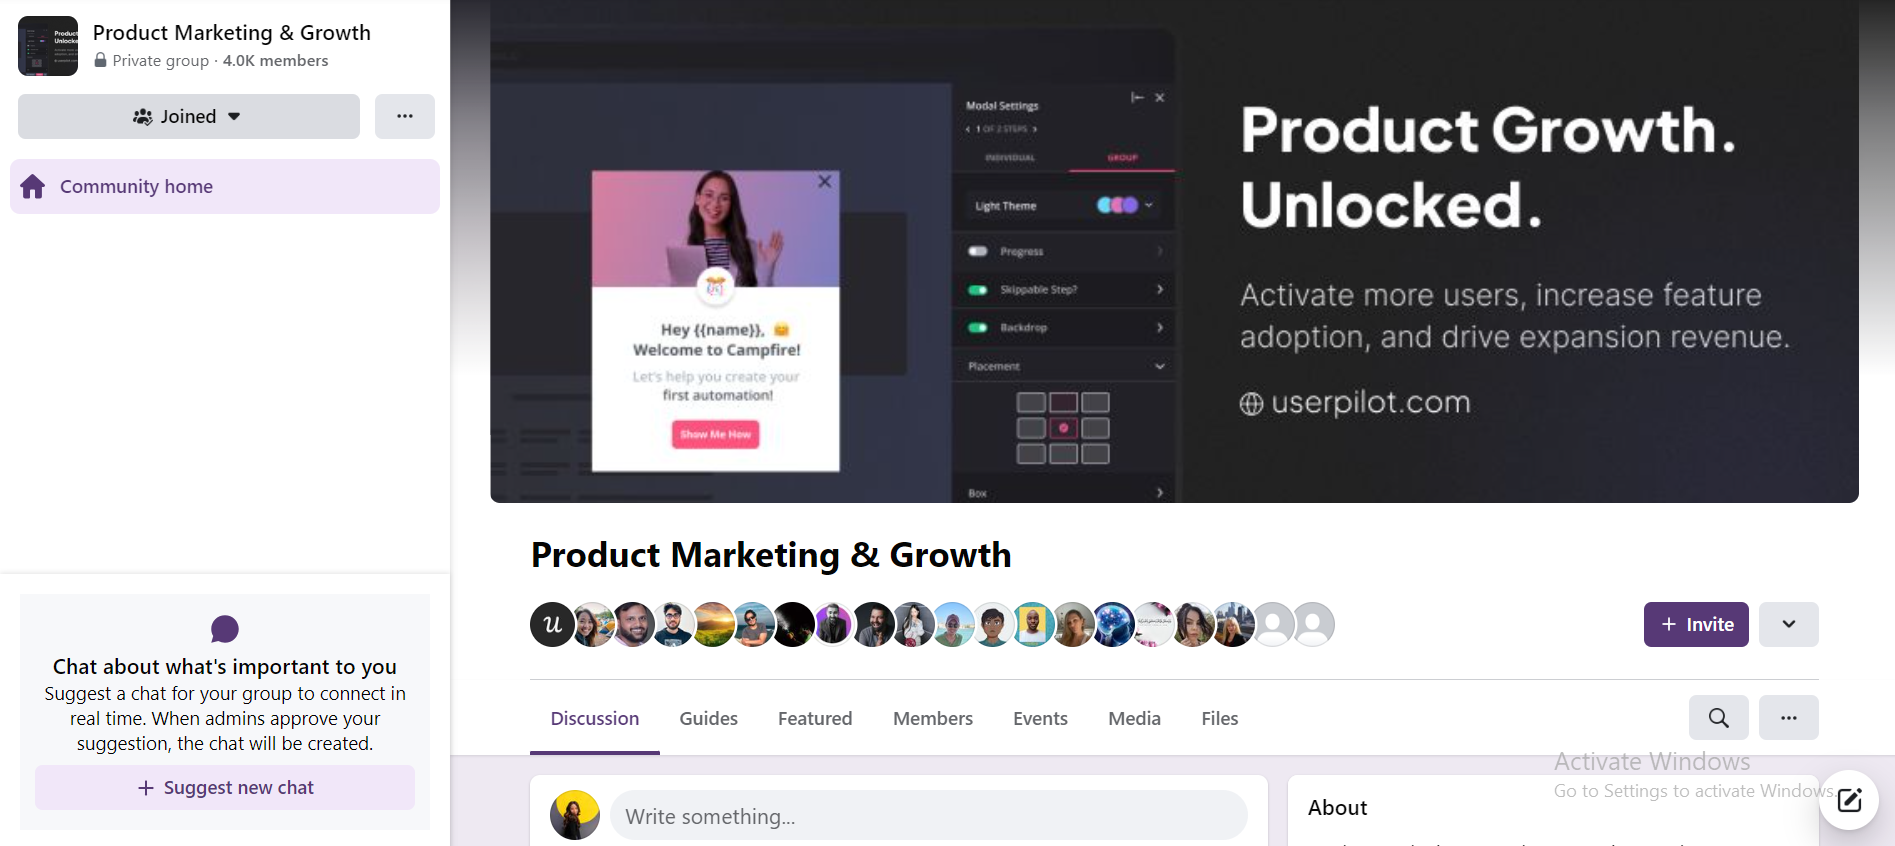 Userpilot’s Product Marketing & Growth Facebook group.